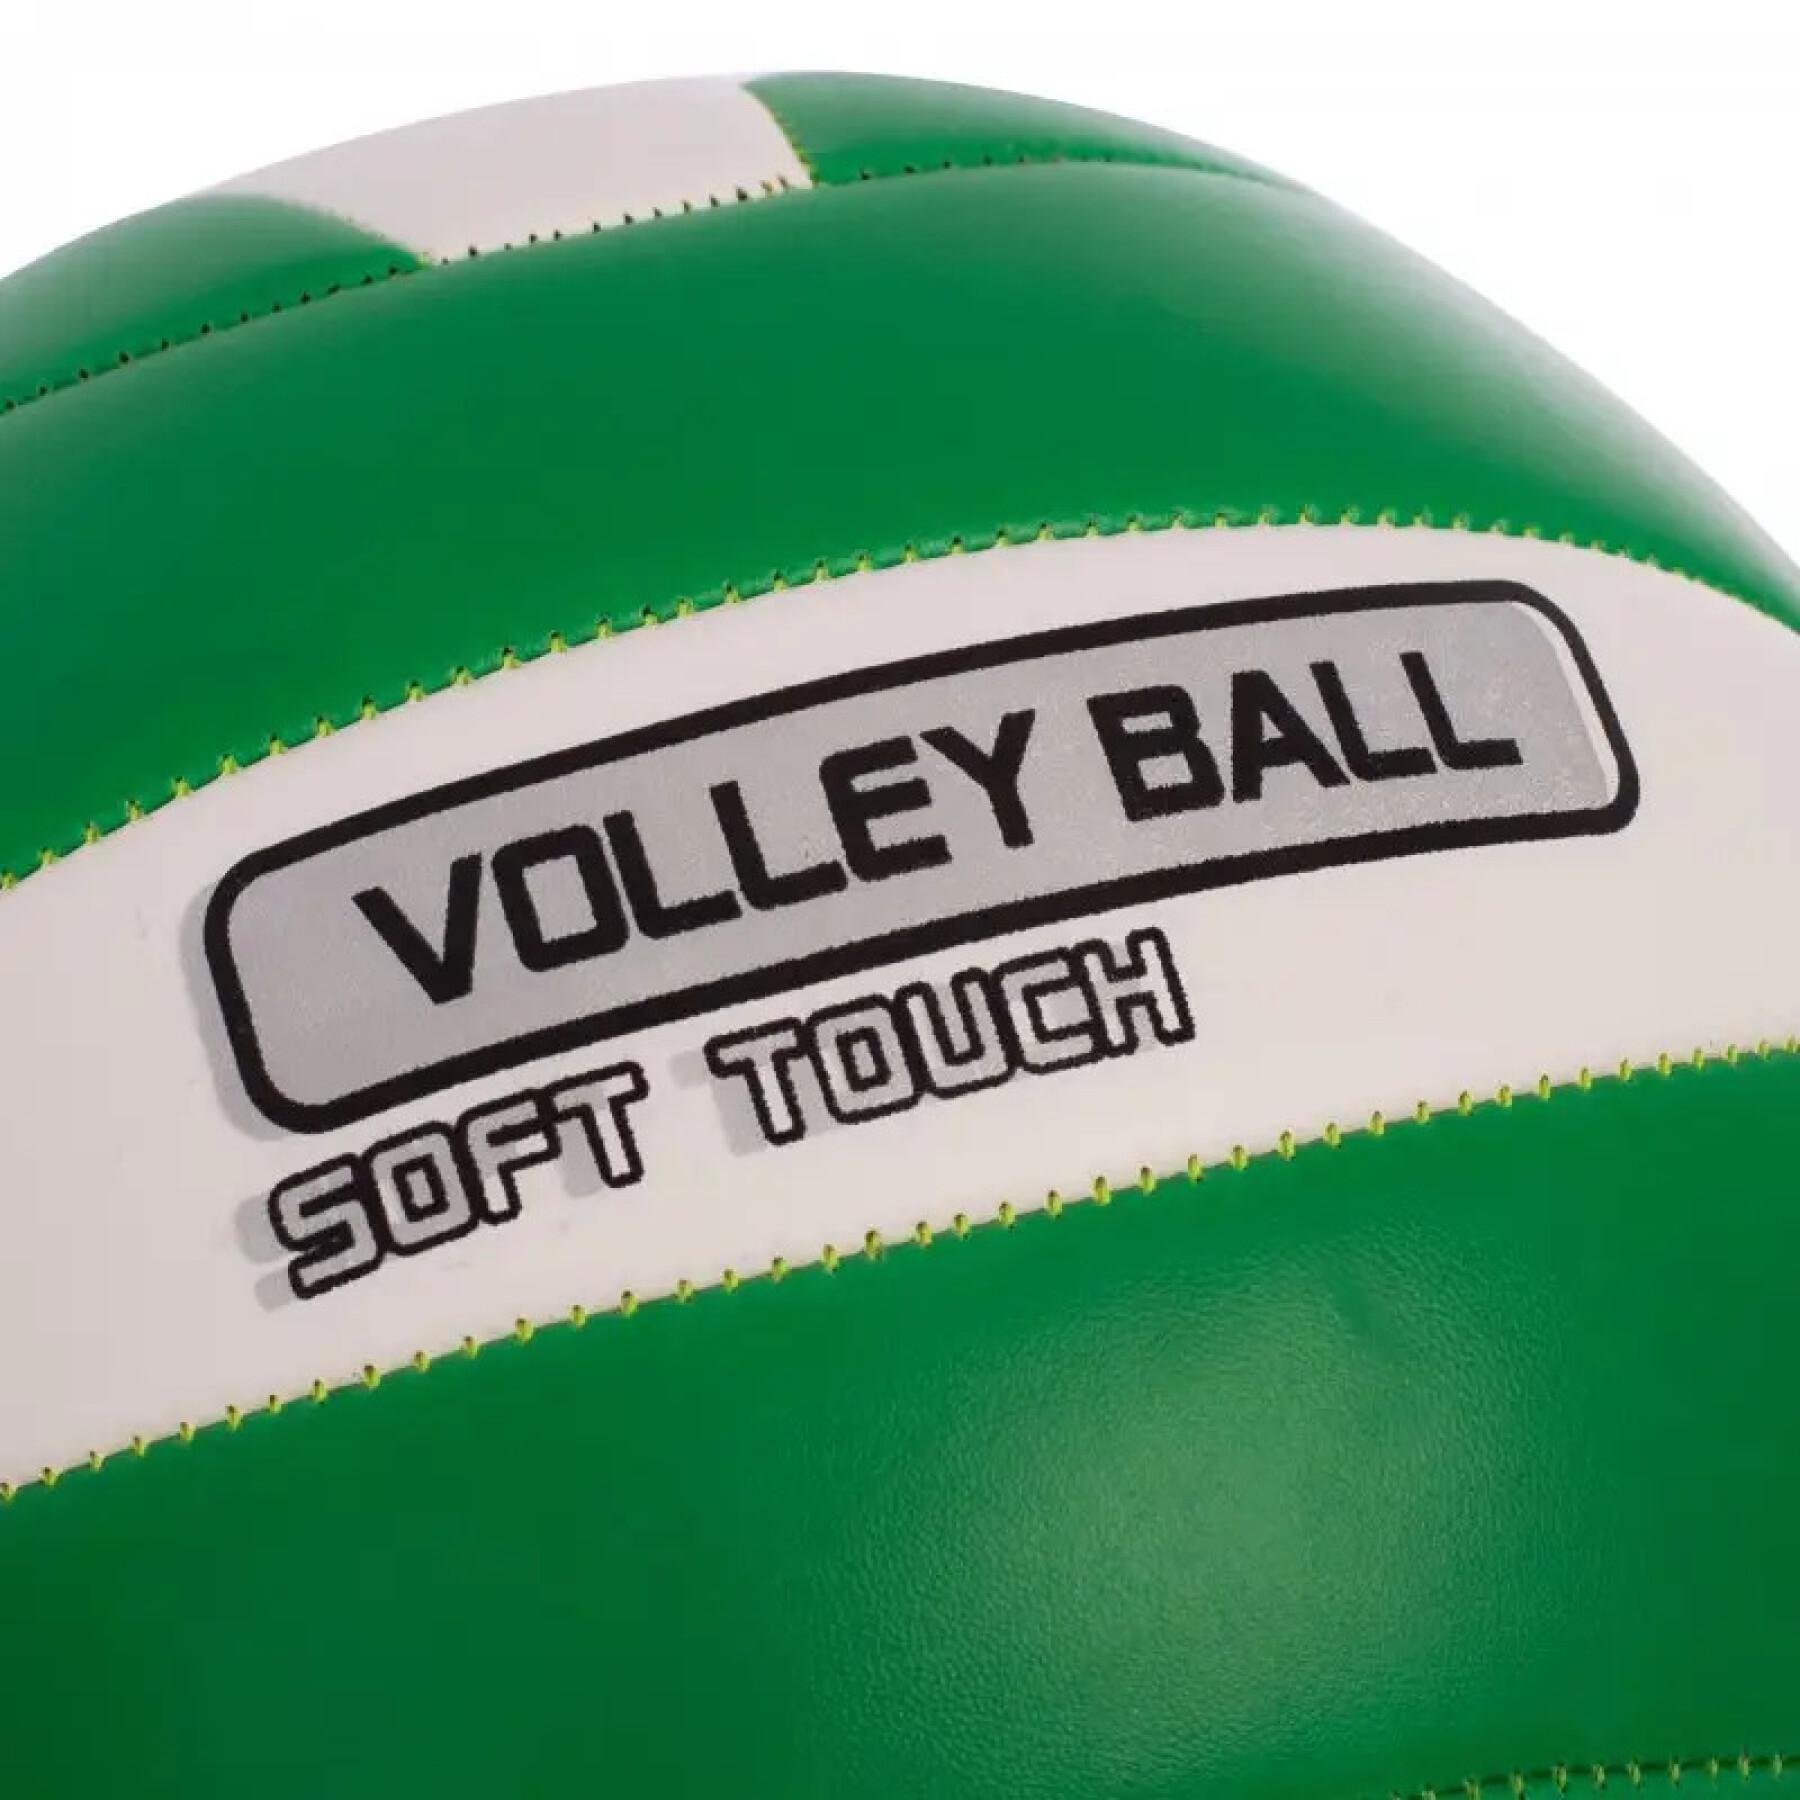 Bola de voleibol Softee Eclipse